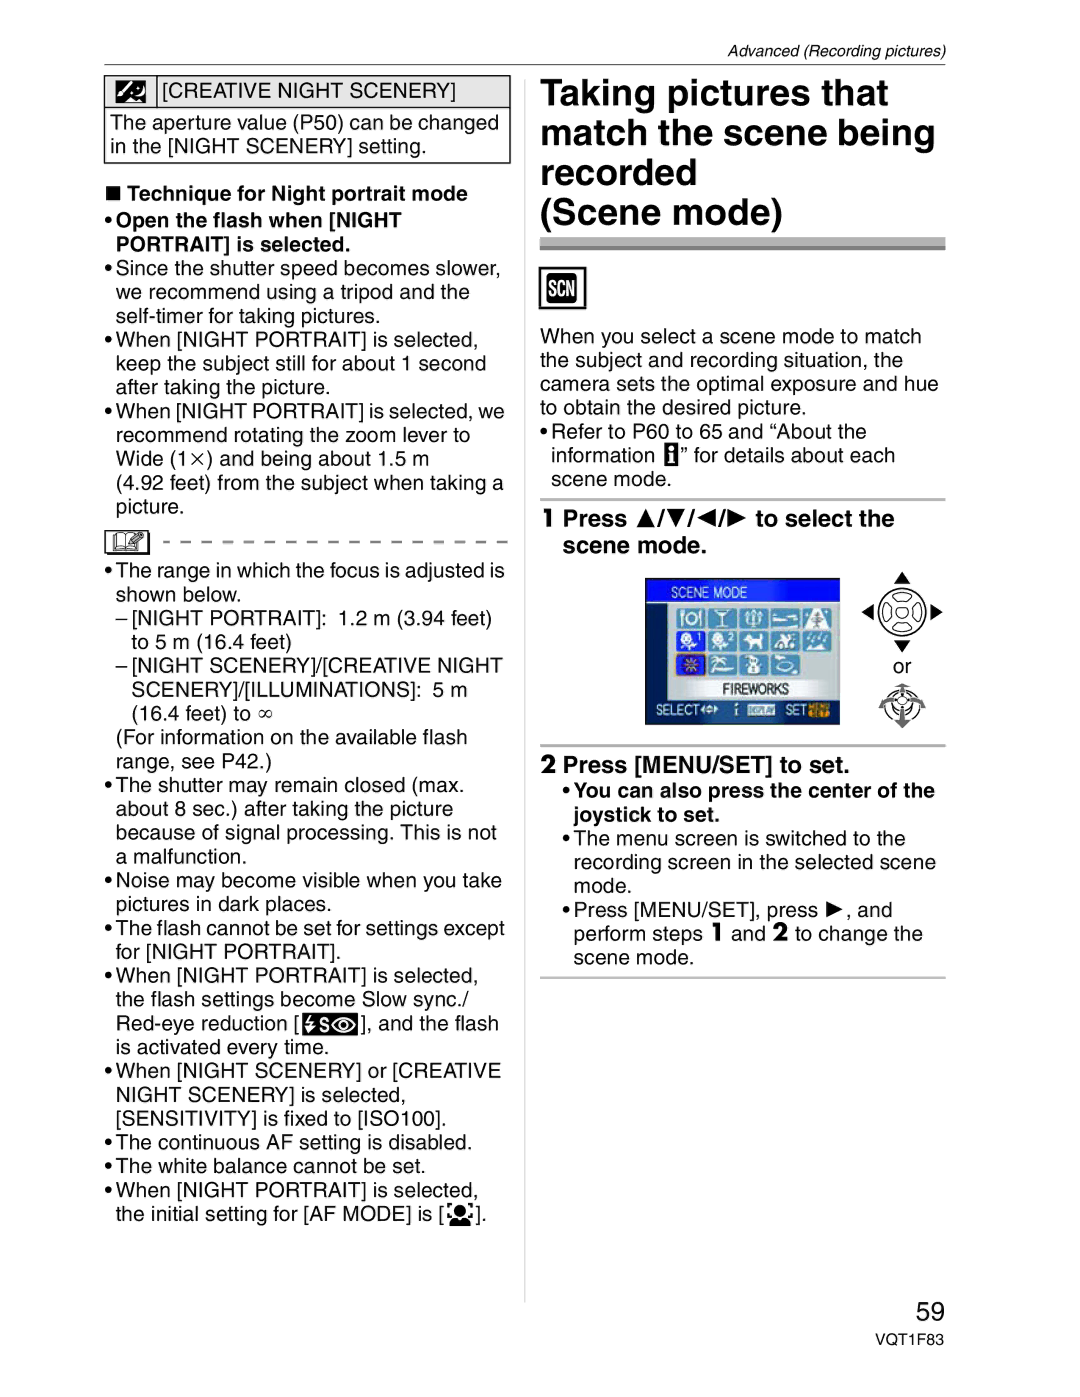 Panasonic DMC-FZ18 operating instructions Press /// to select the scene mode Press MENU/SET to set 